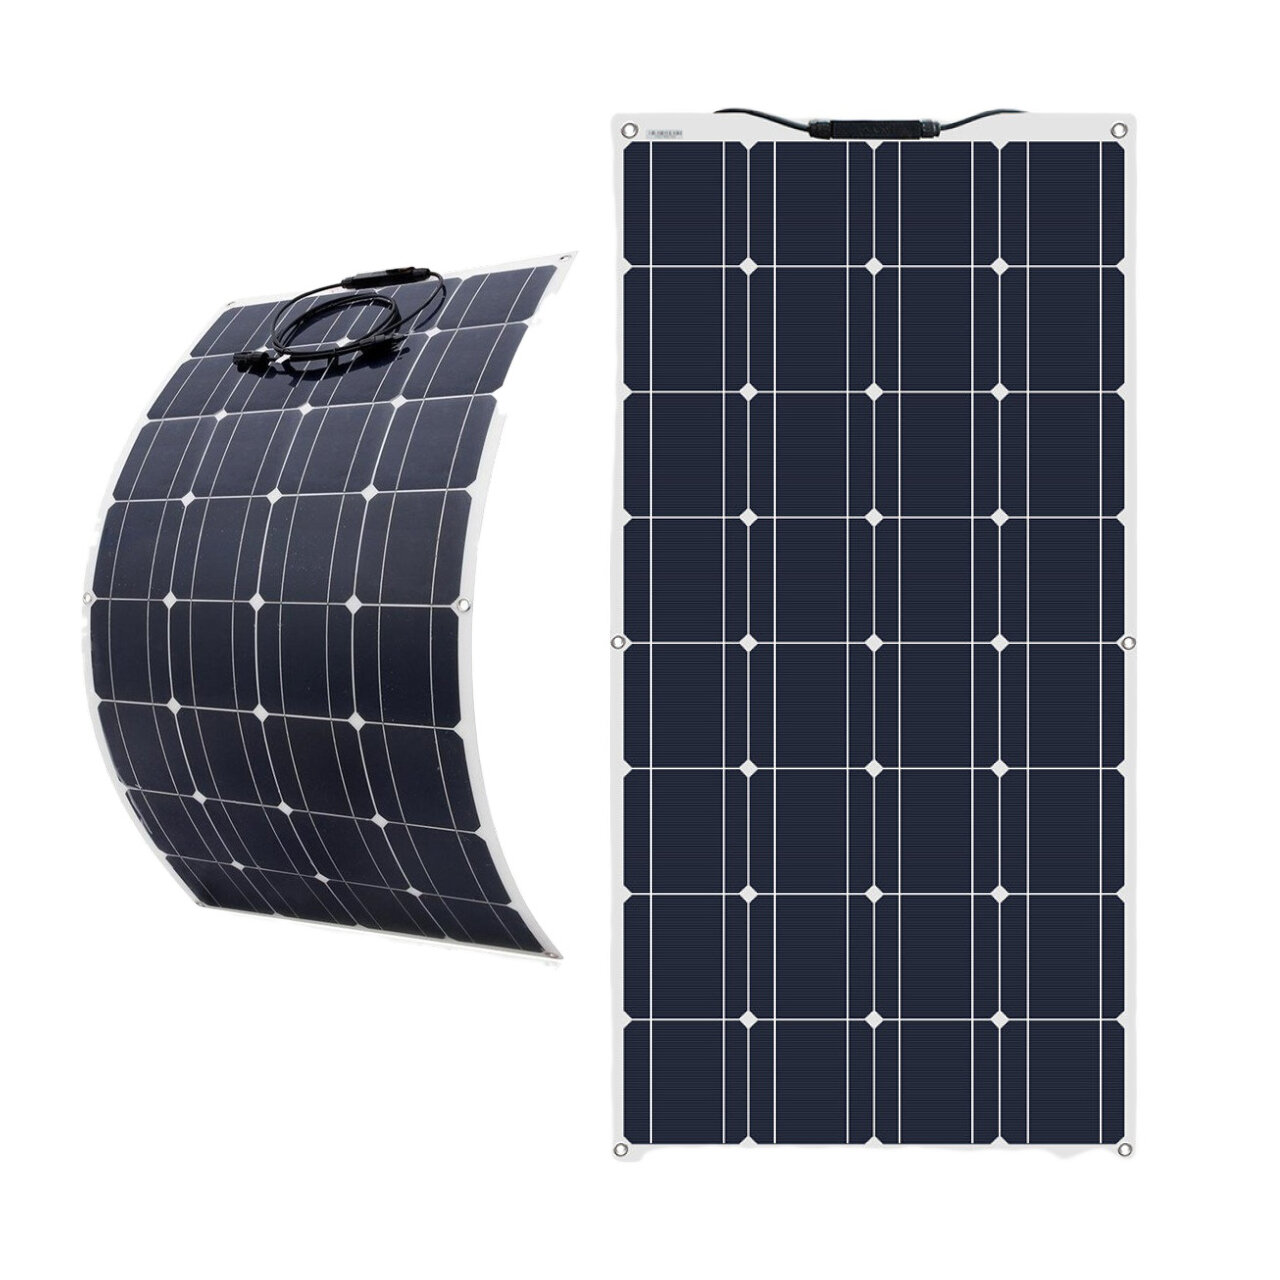 120W Solarpanel Flexibel Tragbar Batterie Ladegerät Monokristalline Solarzelle Outdoor Camping Travel